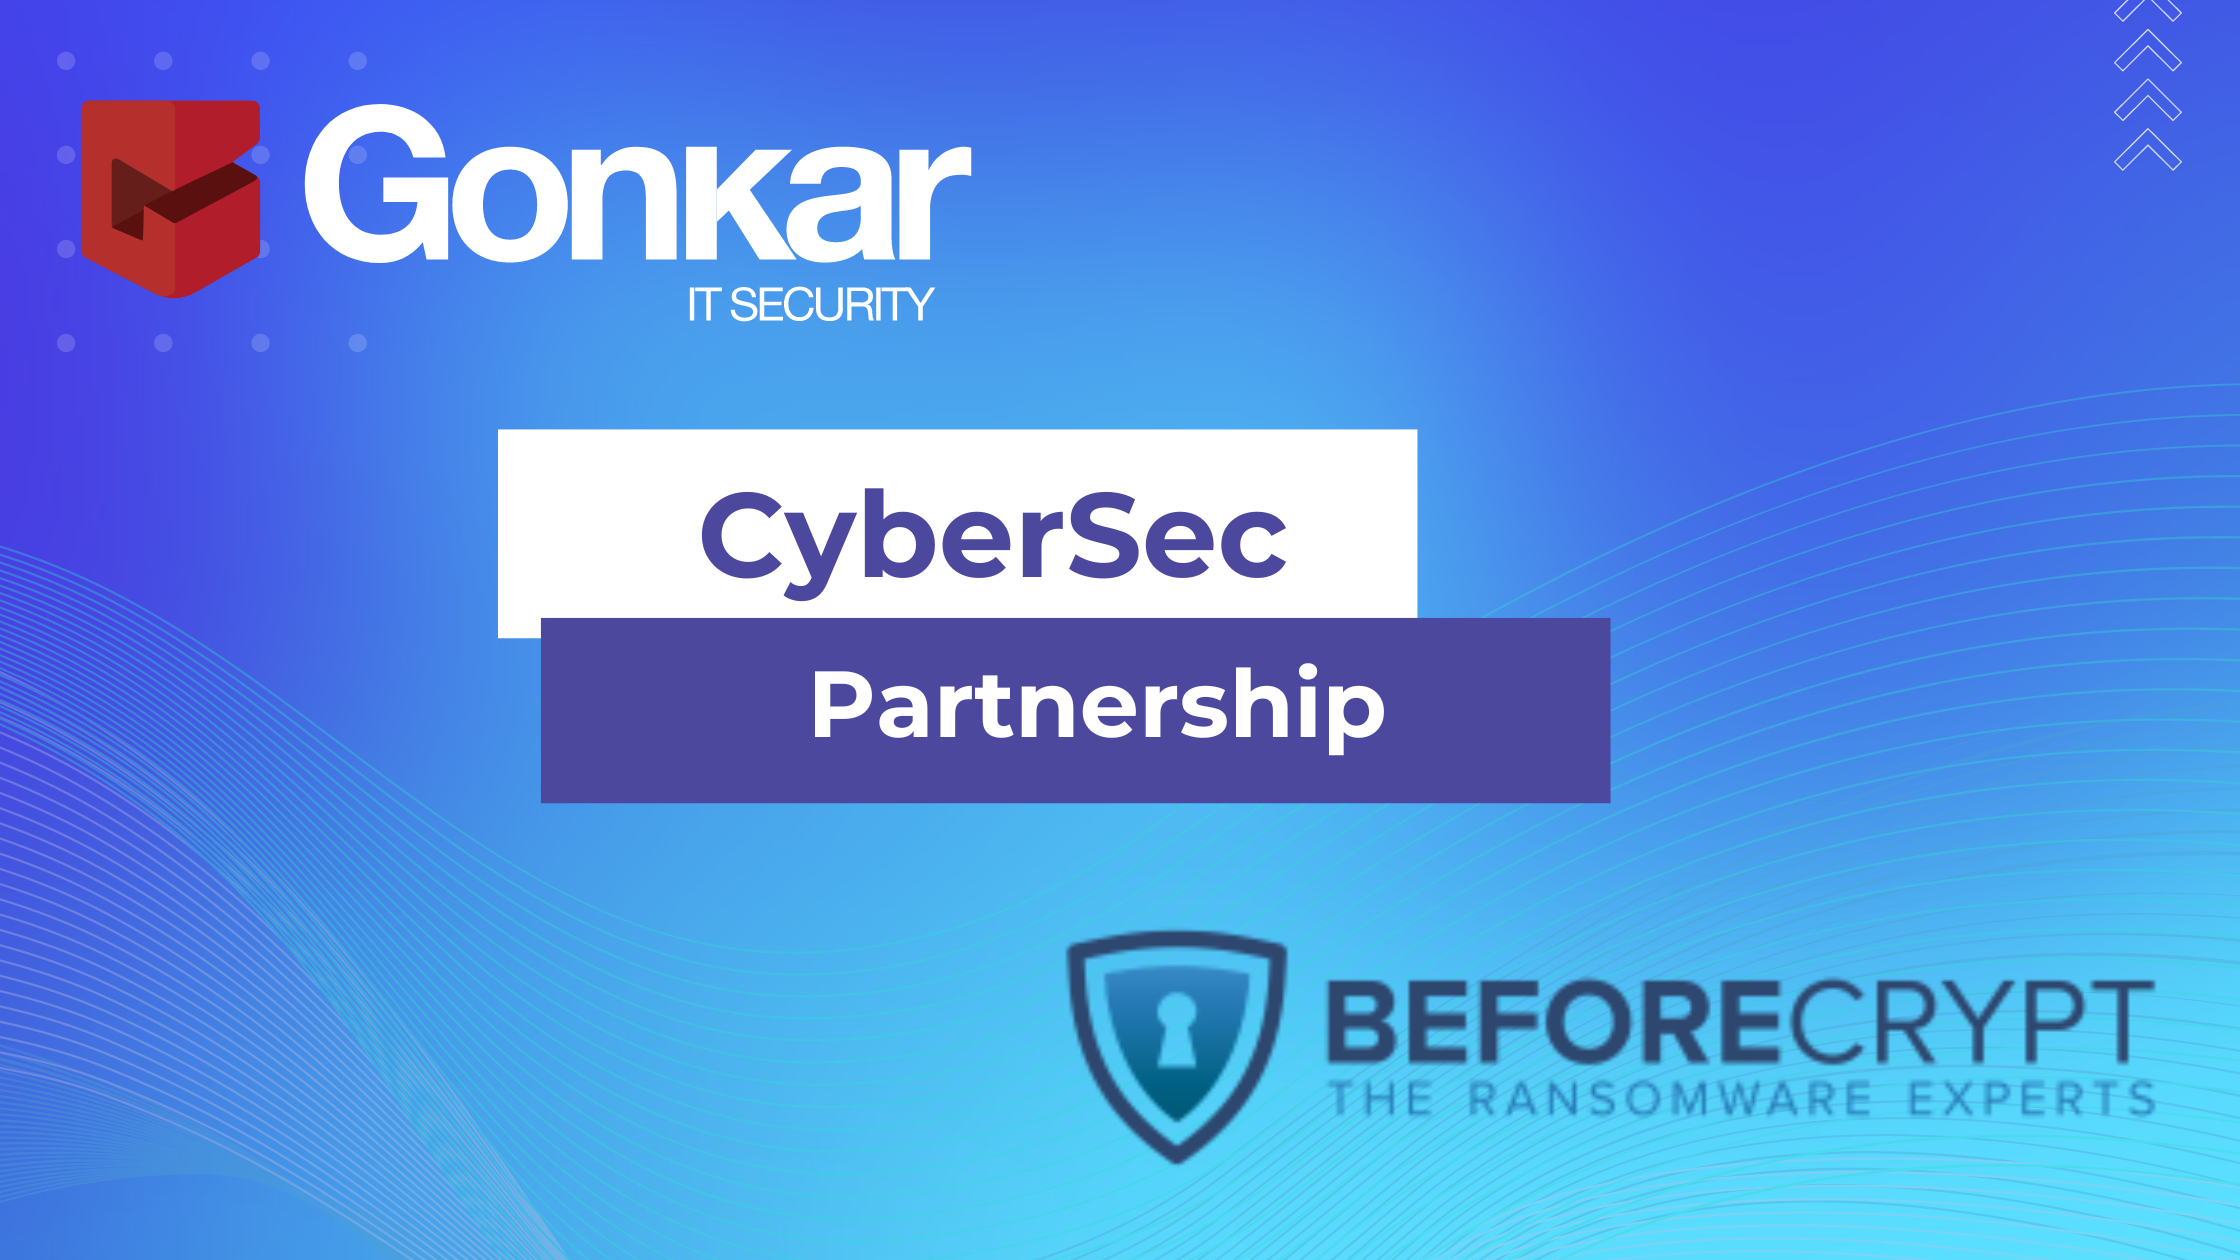 Gonkar BeforeCrypt Partnership